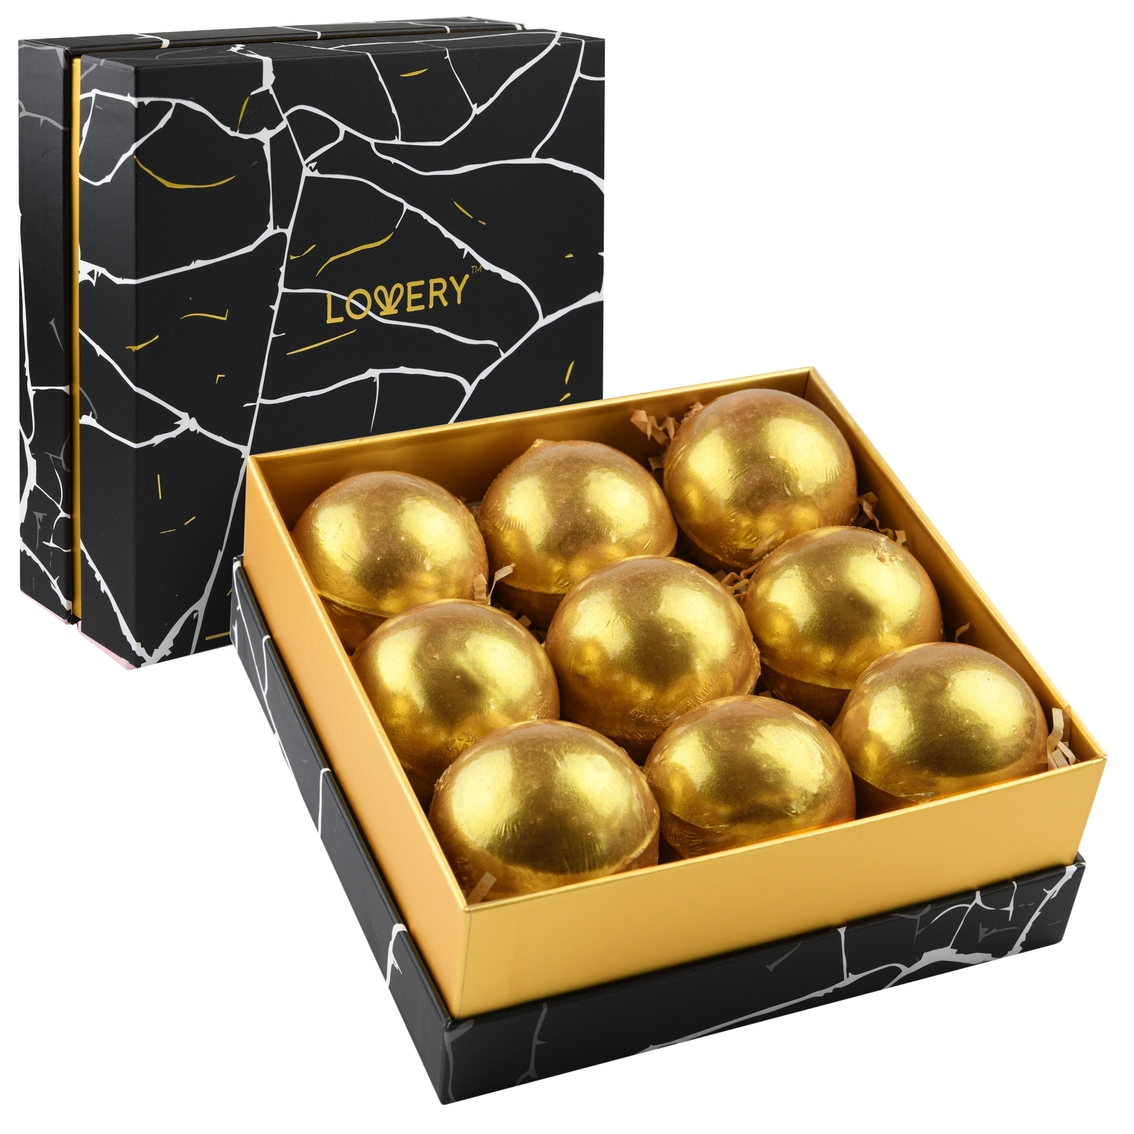 Lovery 24K Gold Bath Bombs Gift Box 9 Handmade Spa Bombs - Image 1 of 5